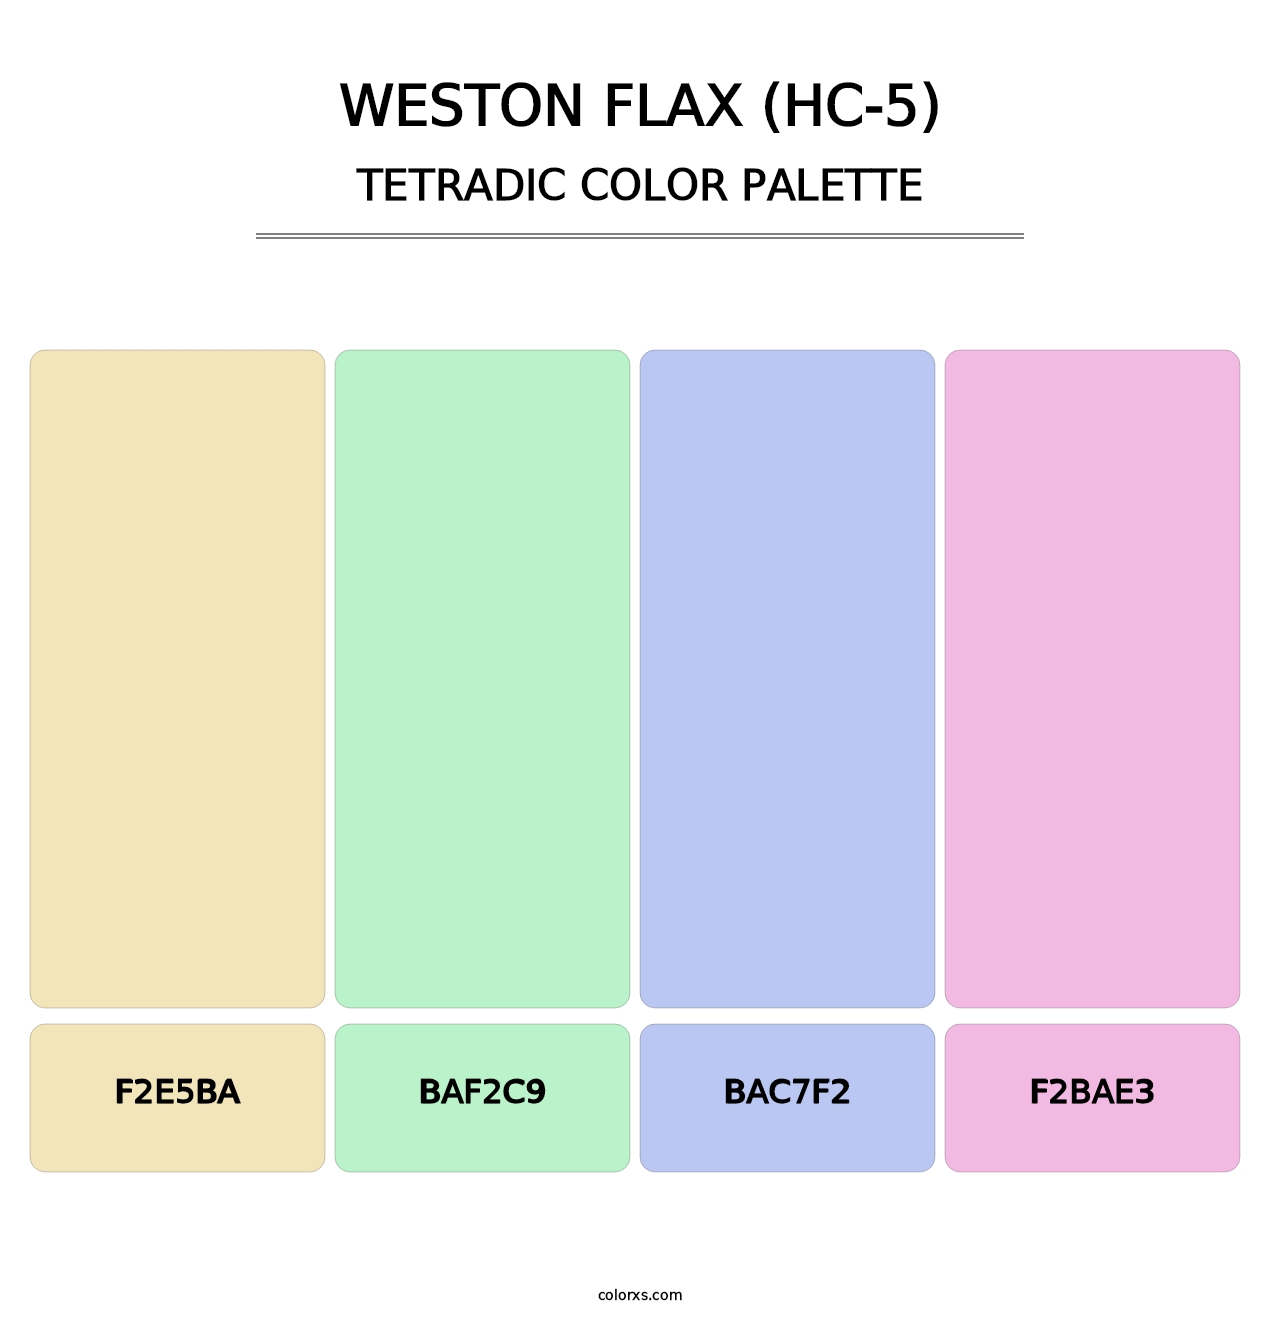 Weston Flax (HC-5) - Tetradic Color Palette